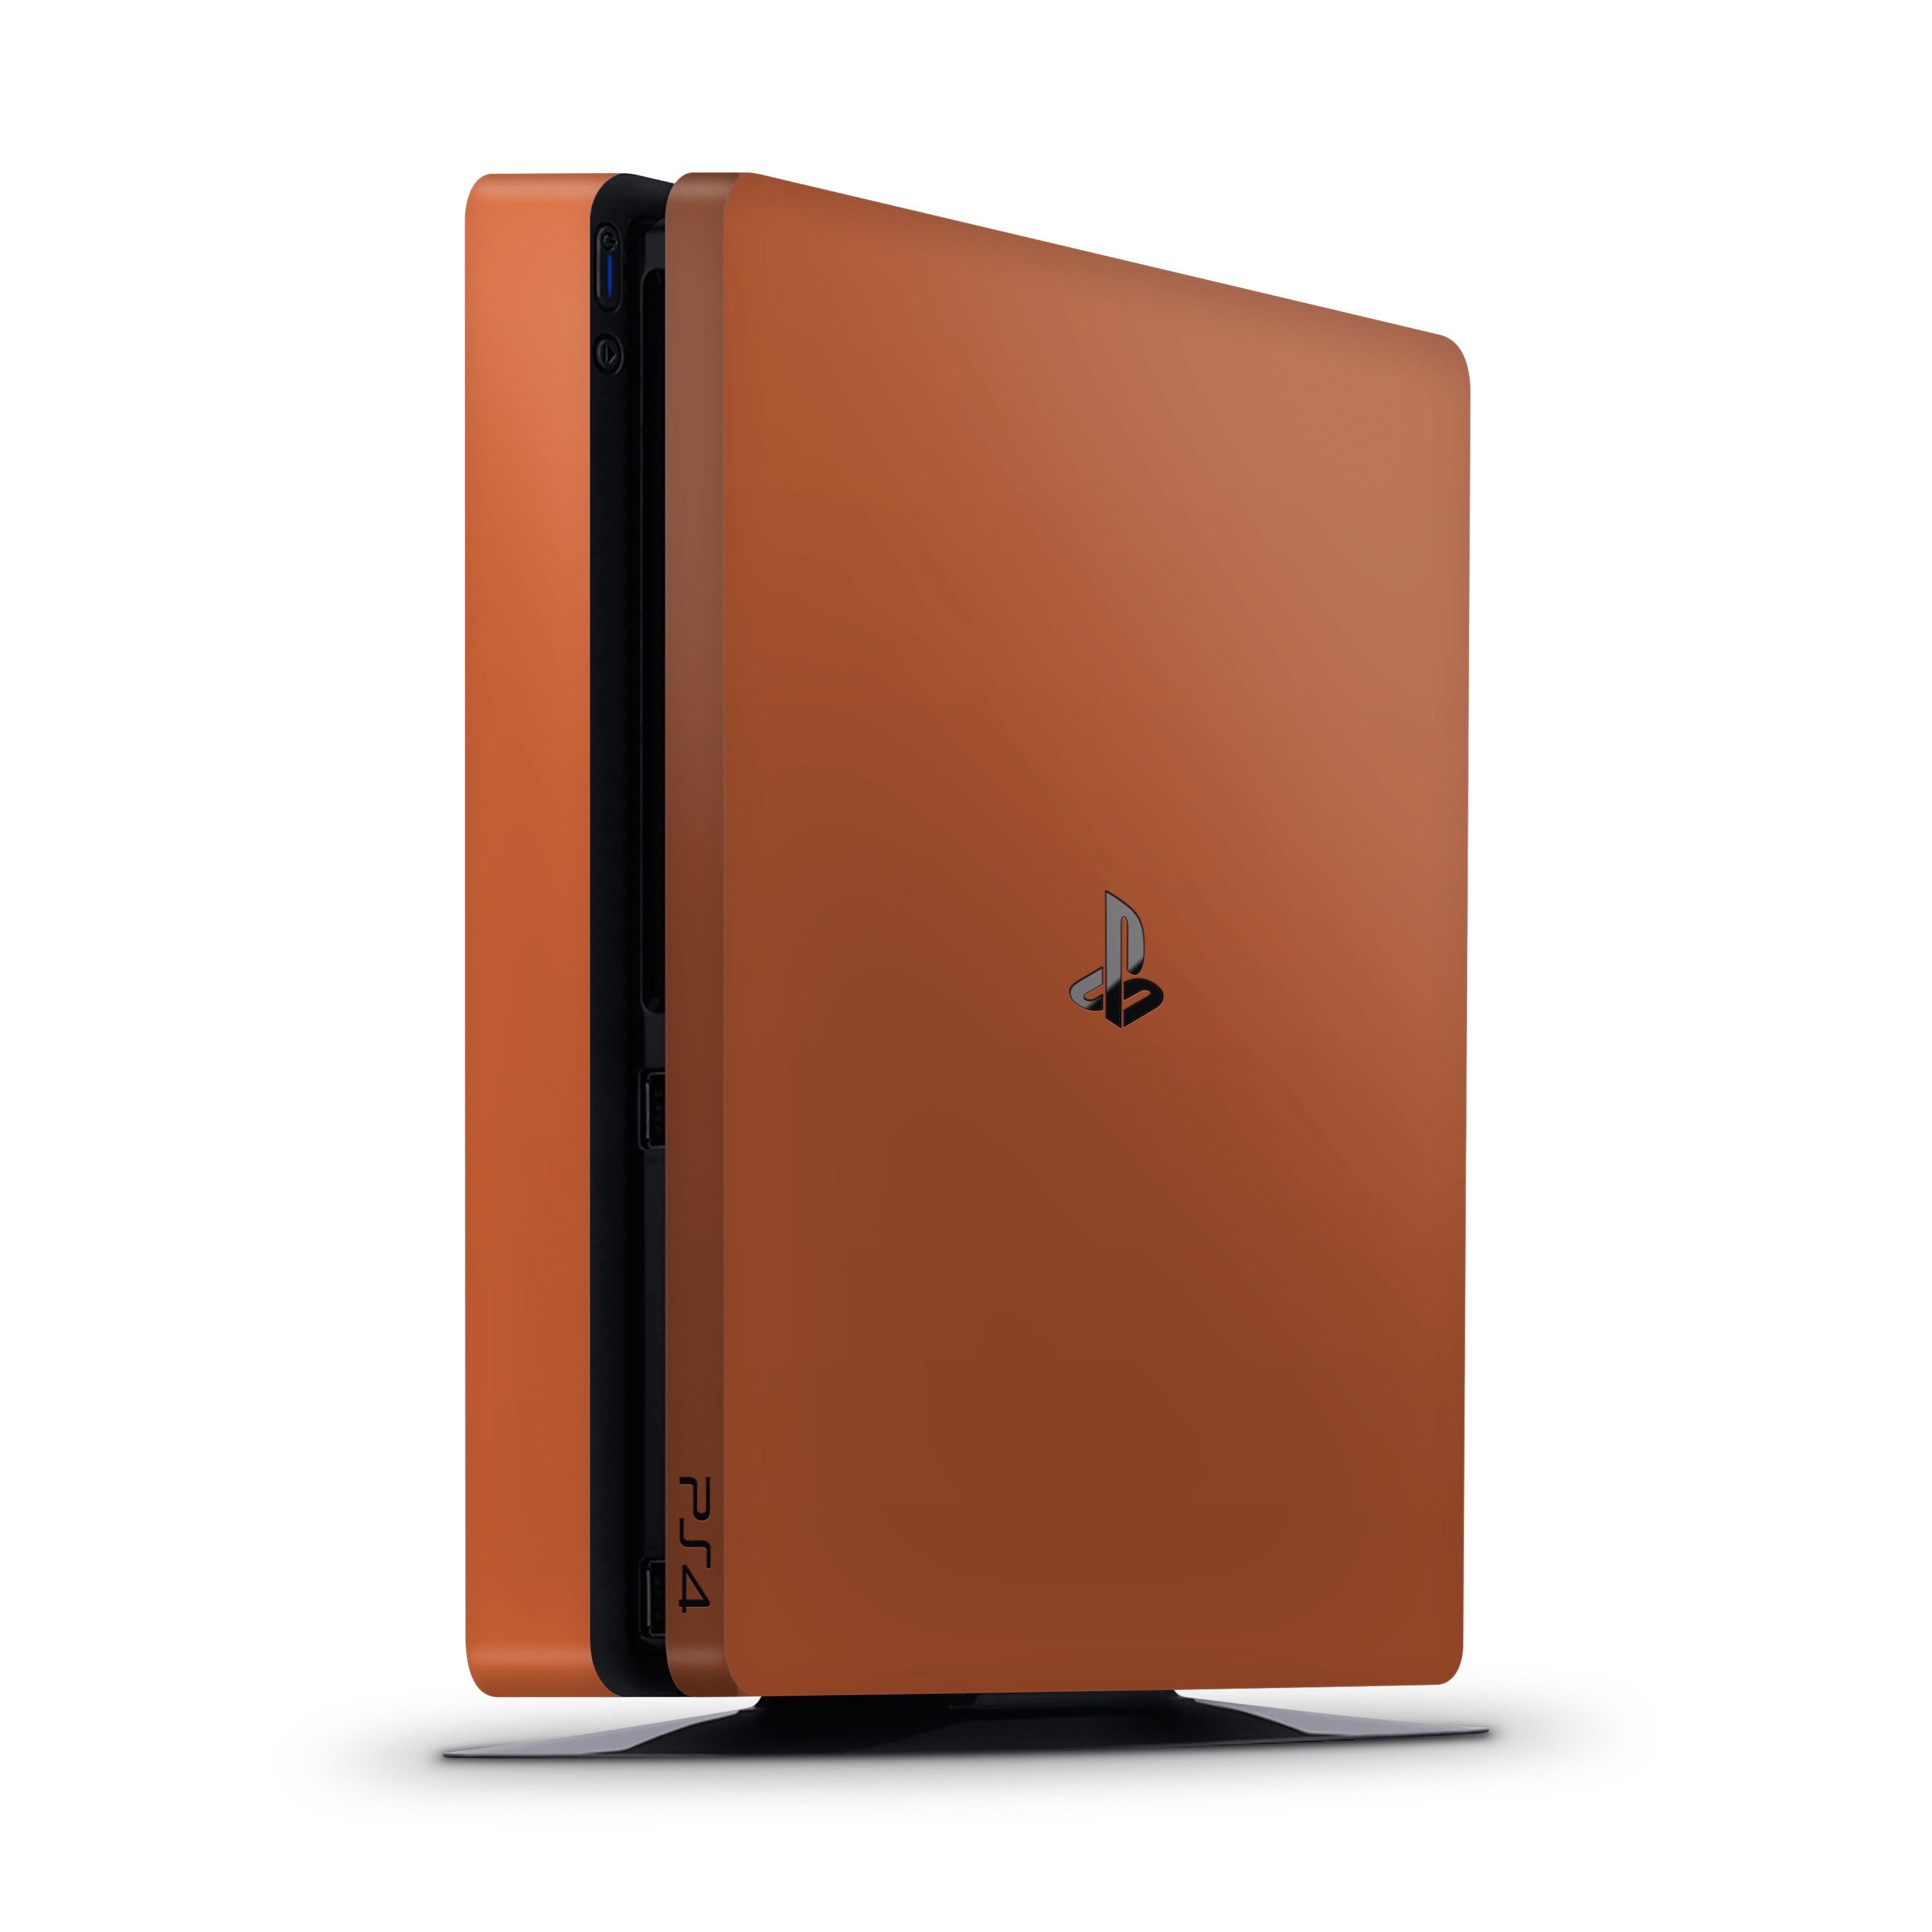 Burnt Orange PS4 | PS4 Pro | PS4 Slim Skins